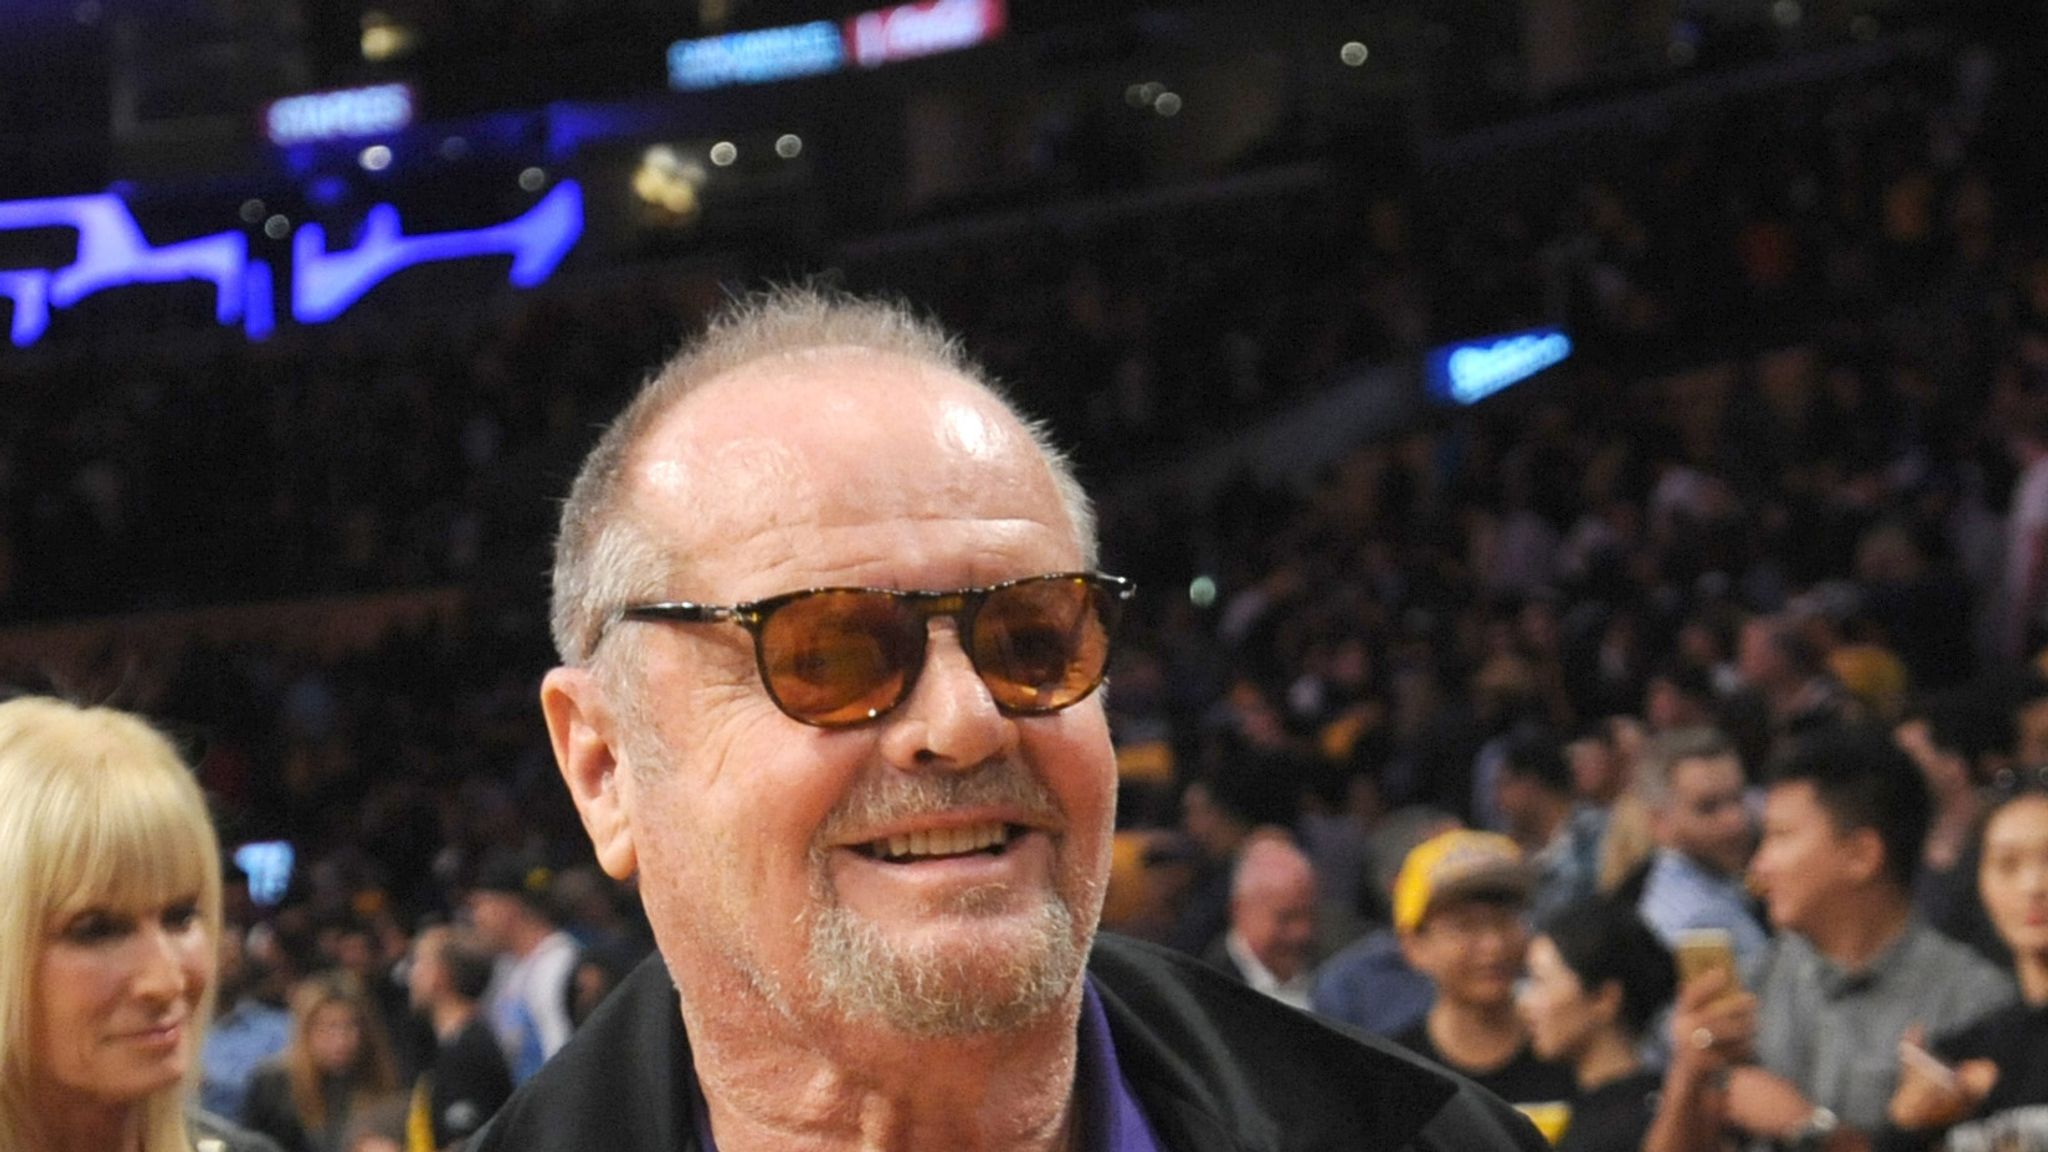 Jack Nicholson 'set to return to big screen' after seven year hiatus